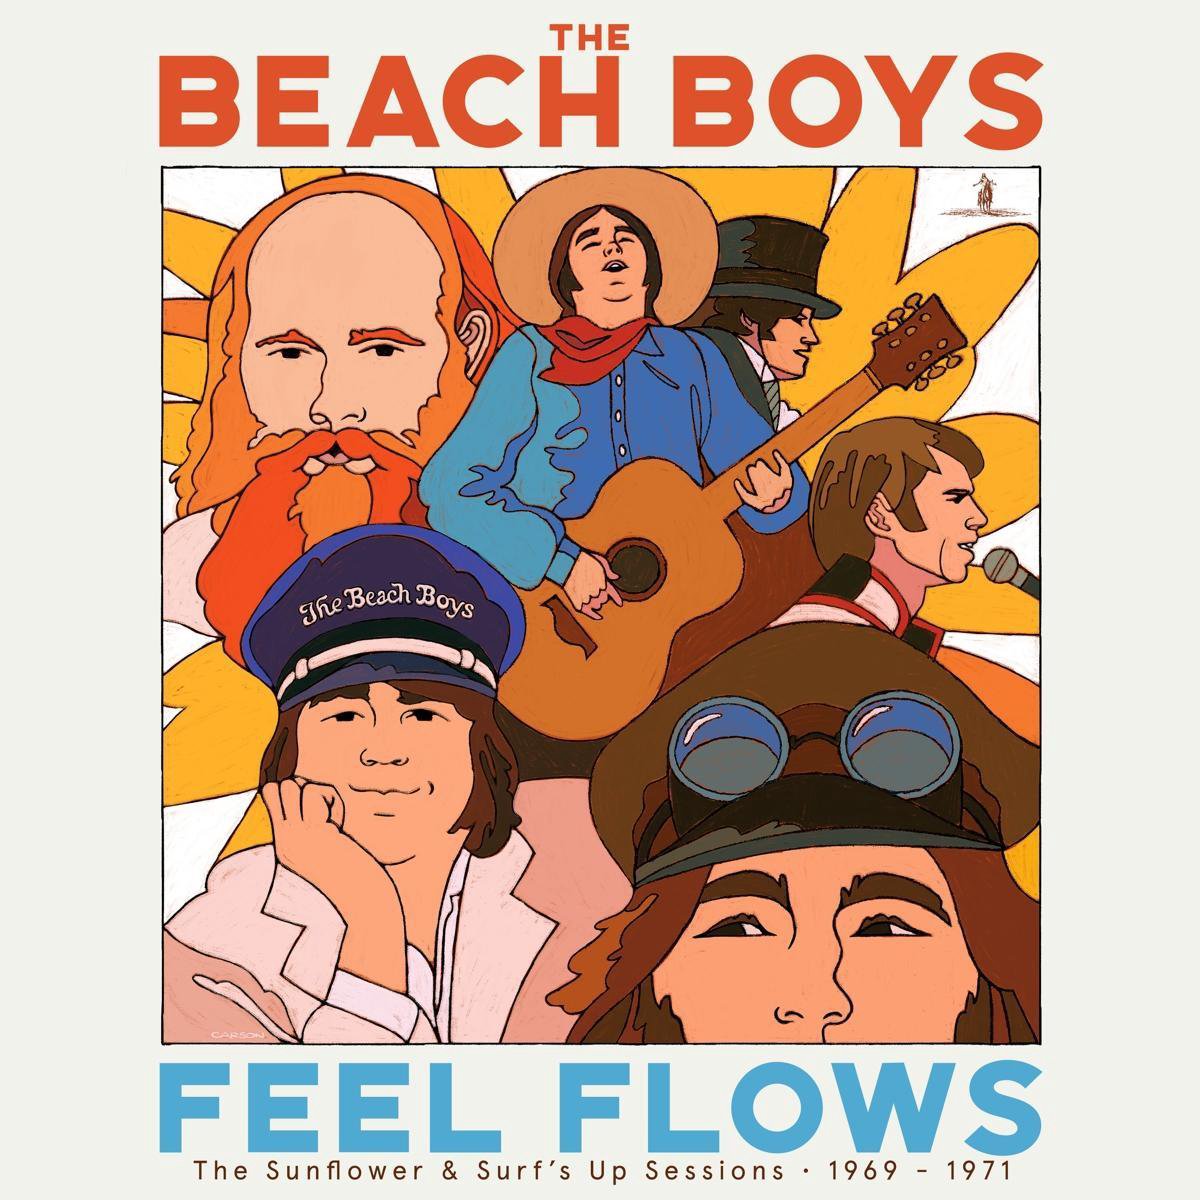 BEACH BOYS - Feel Flows: Sunflower & Surf's Up Sessions 1969-1971